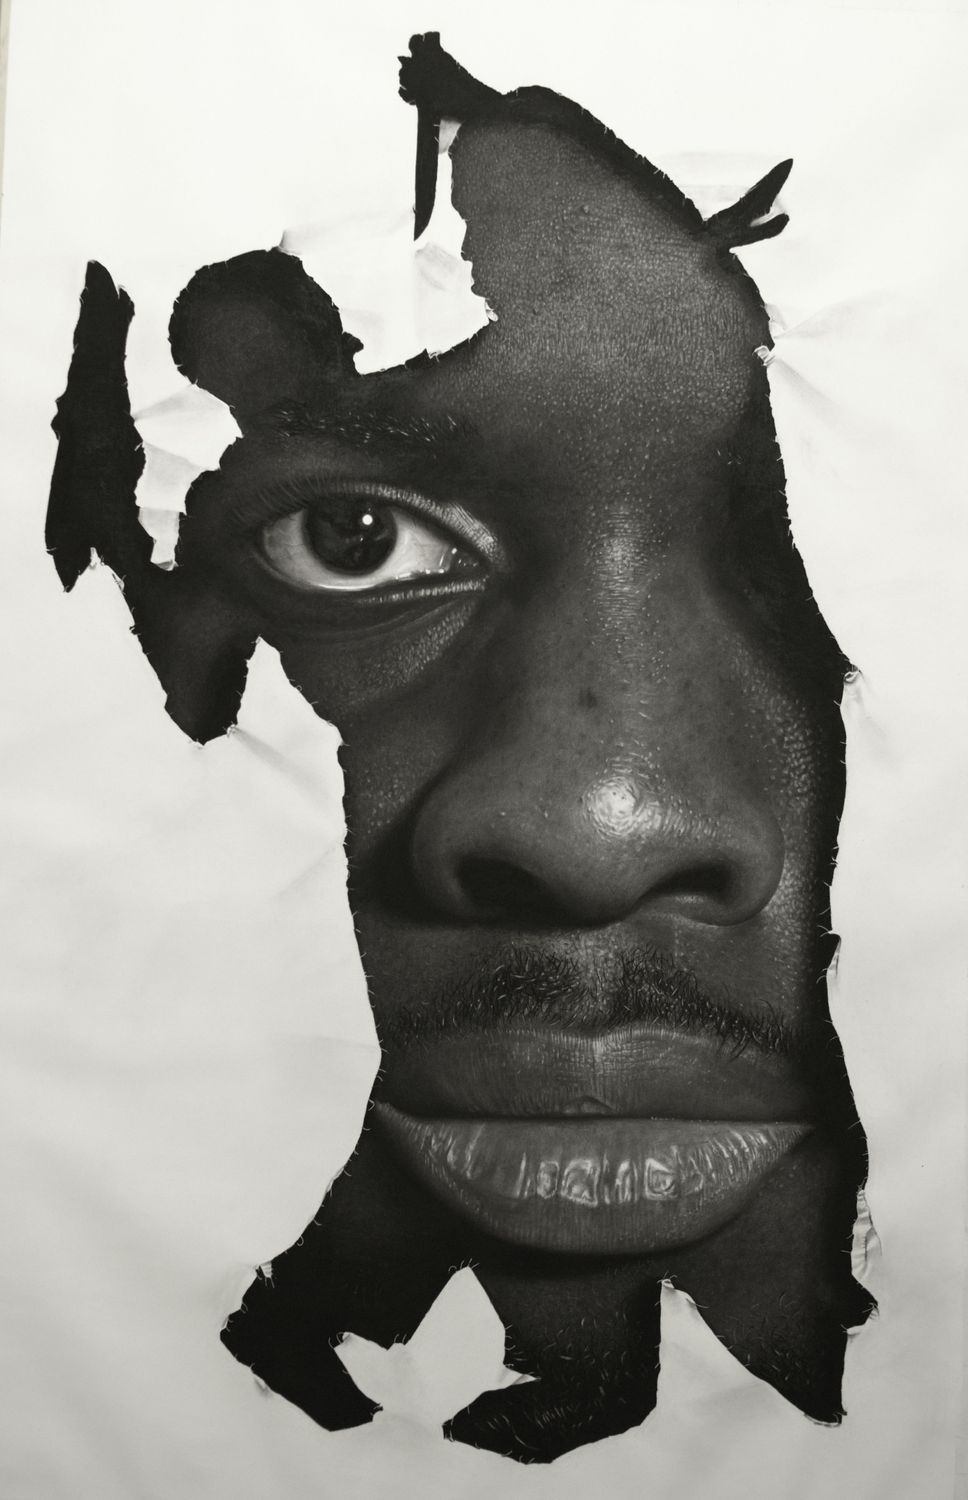 African Artist Spotlight Series: The Surreal World of Ken Nwadiogbu